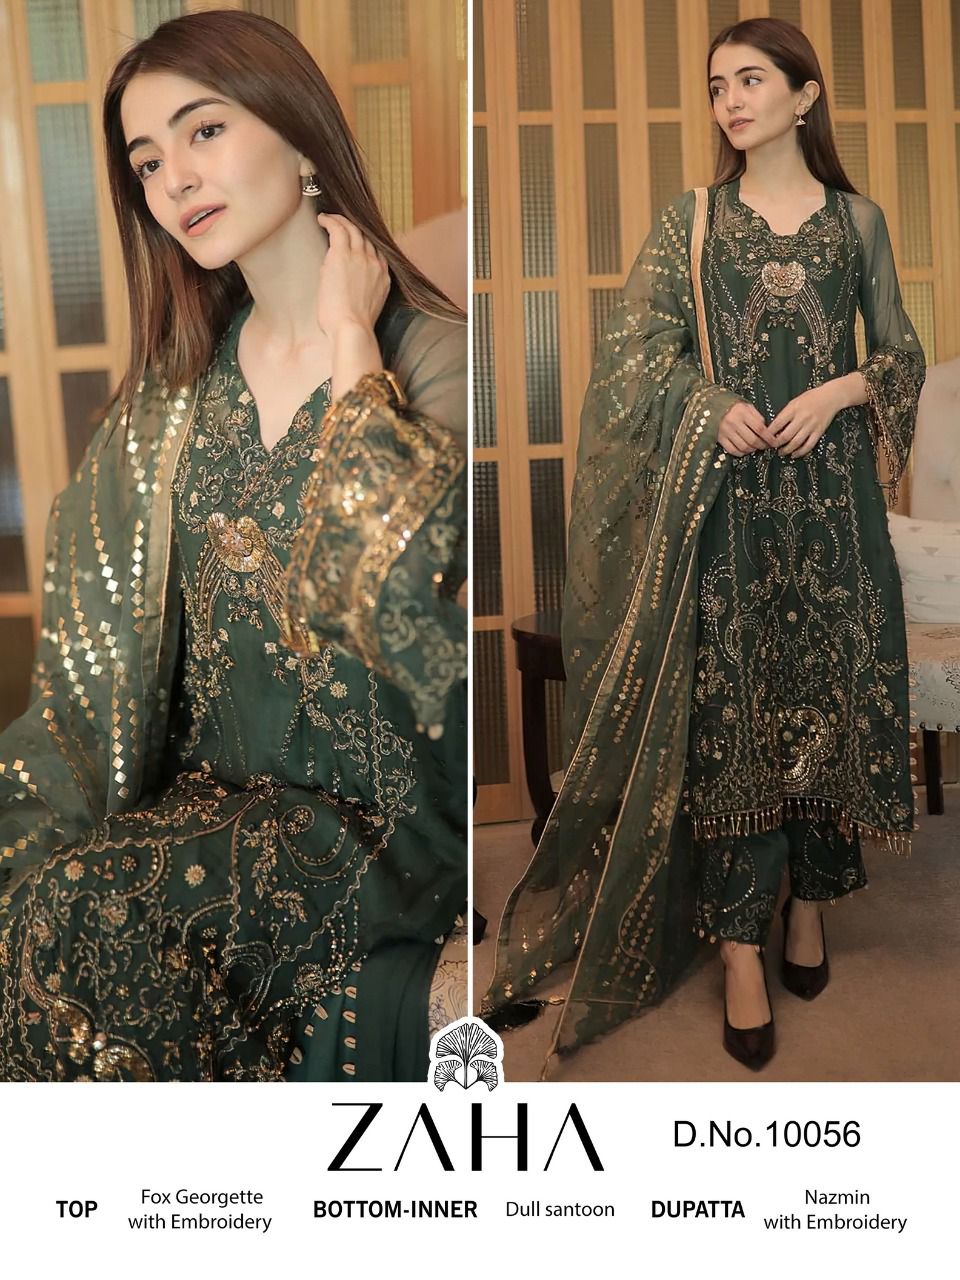 zaha misty vol 4 DNO 10055 10056 10057 georgette regal look salwar suit catalog